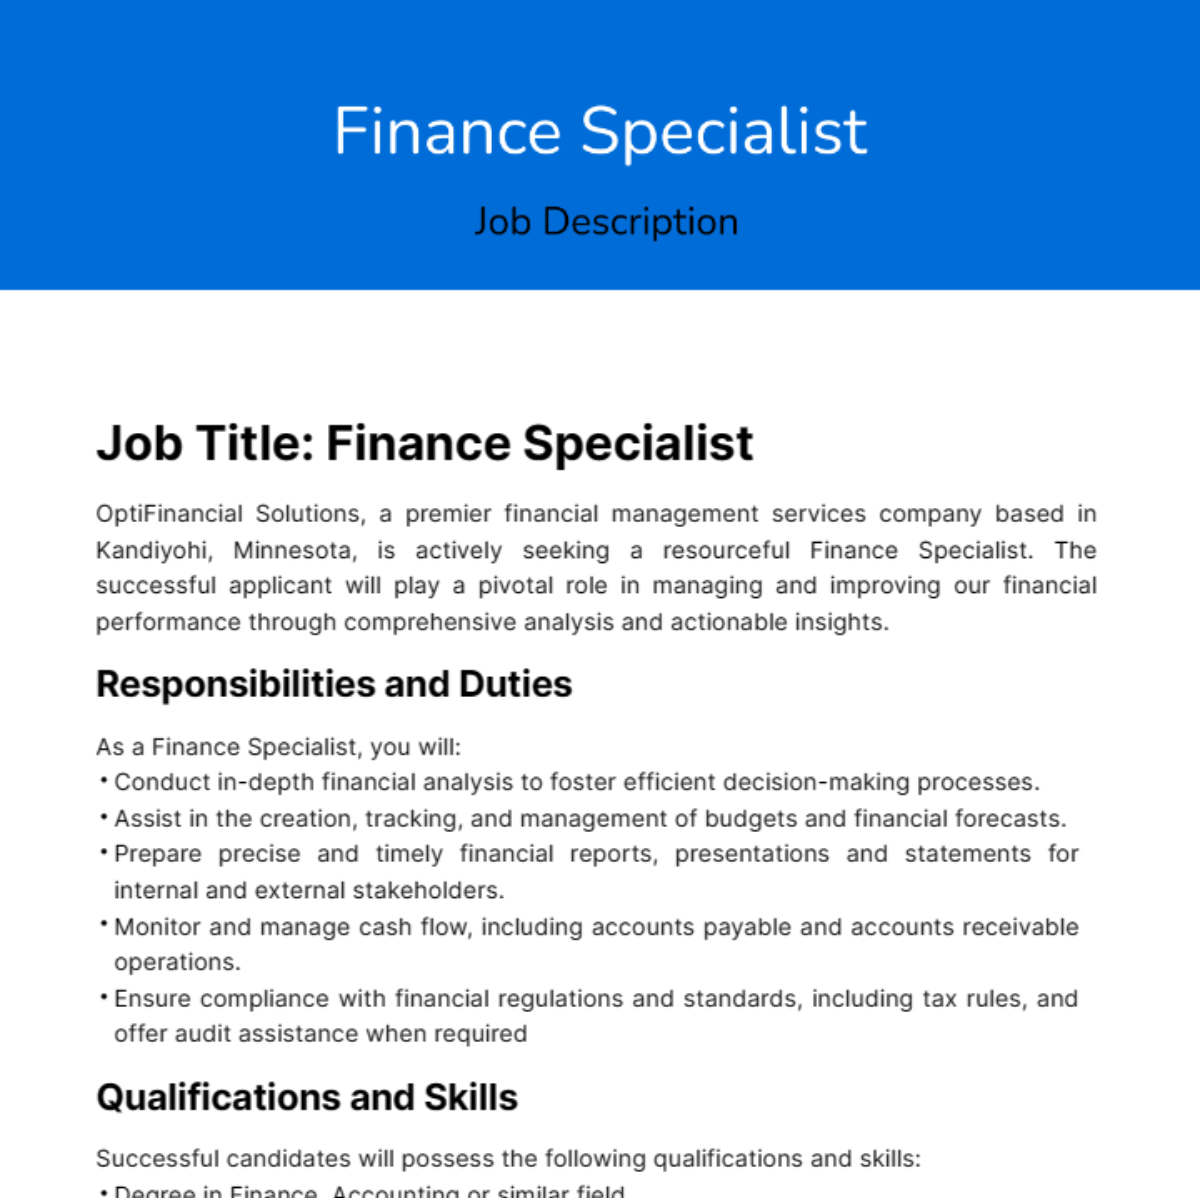 Finance Specialist Job Description Template